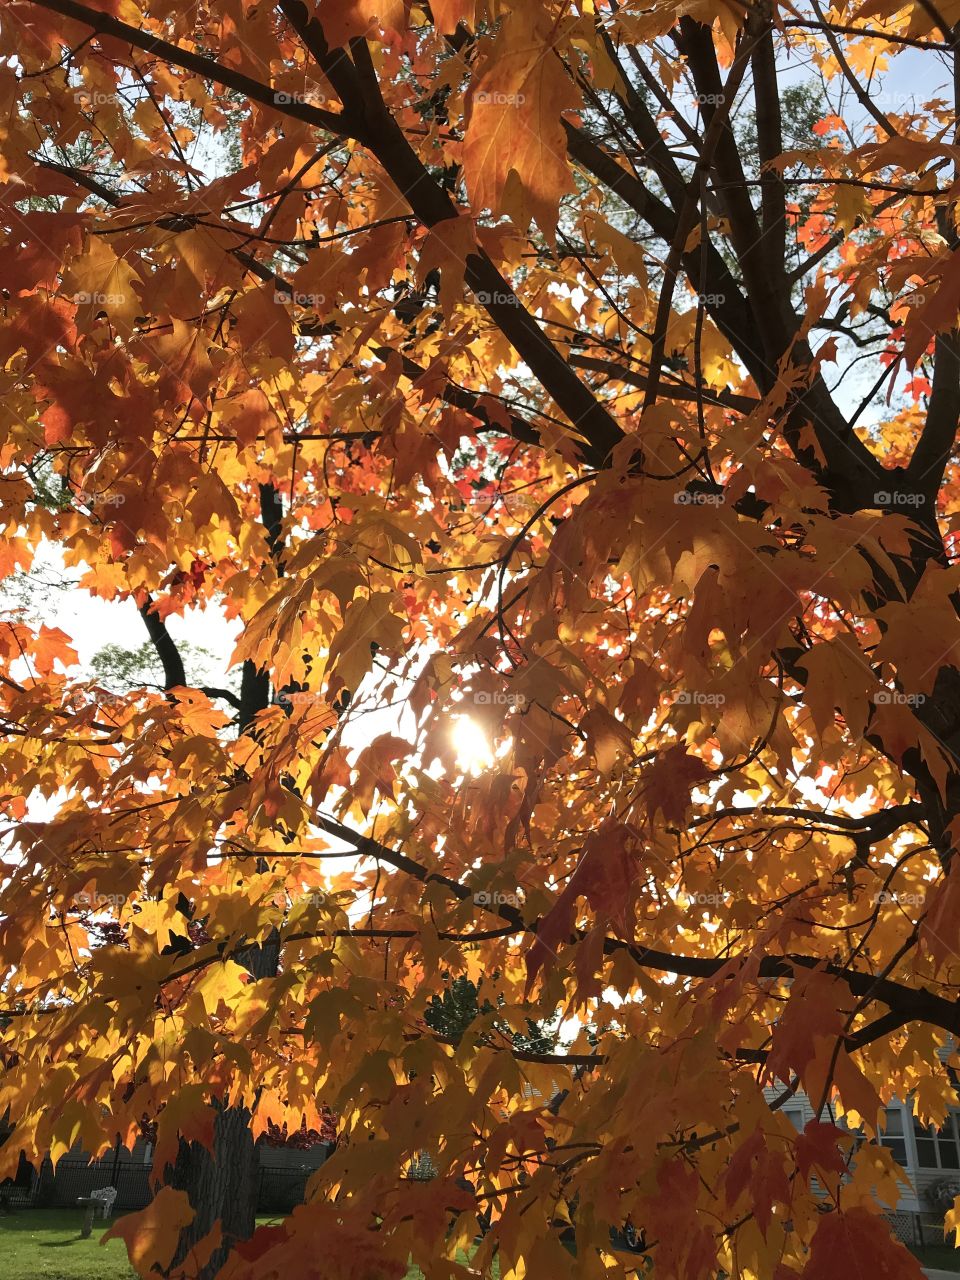 The beautiful colors of fall in Michigan